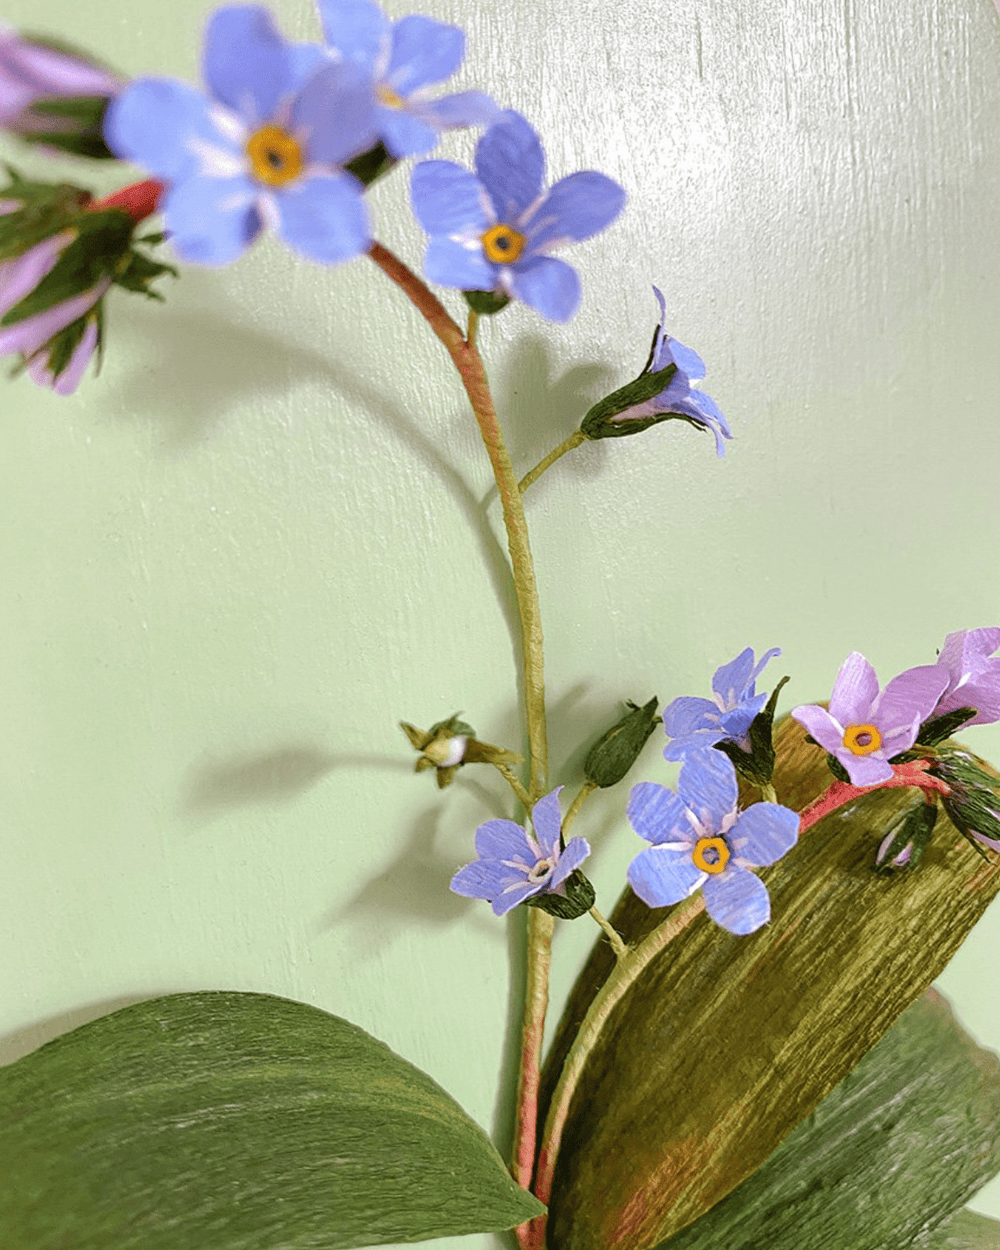 Twentyseven Toronto - Golden Age Botanicals Periwinkle Blue Forget-Me-Nots - 6.5” wide x 9” tall